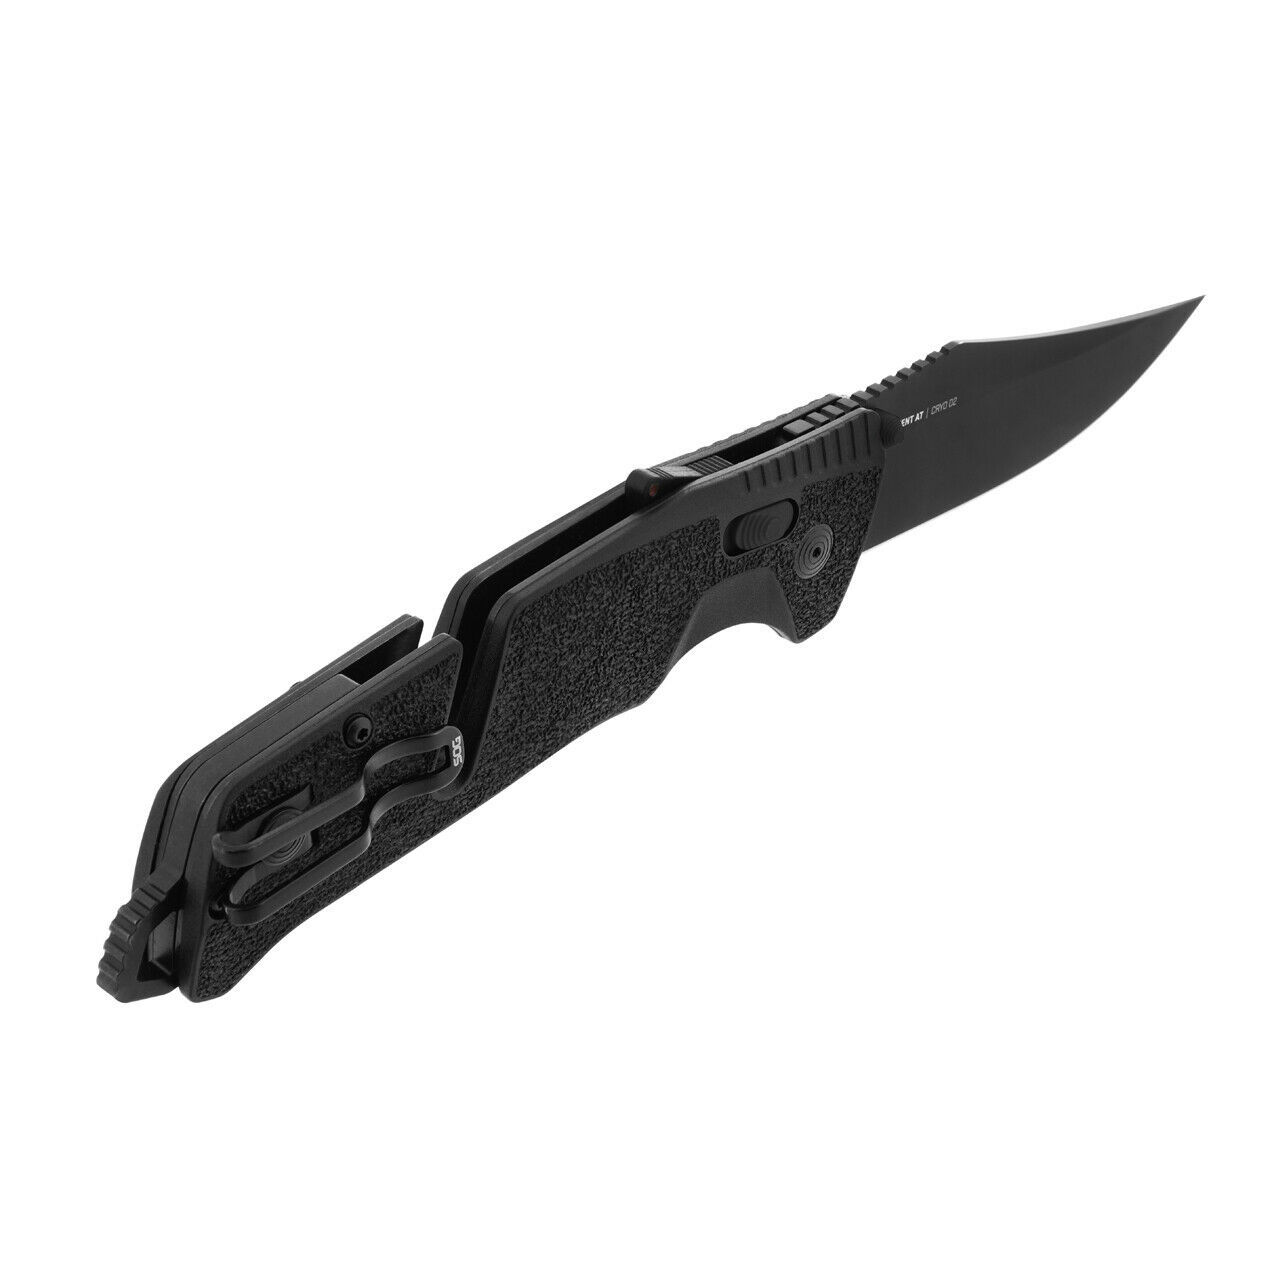 Полуавтоматический складной нож Trident Mk3 Blackout, сталь D2, рукоять GRN - фото 6